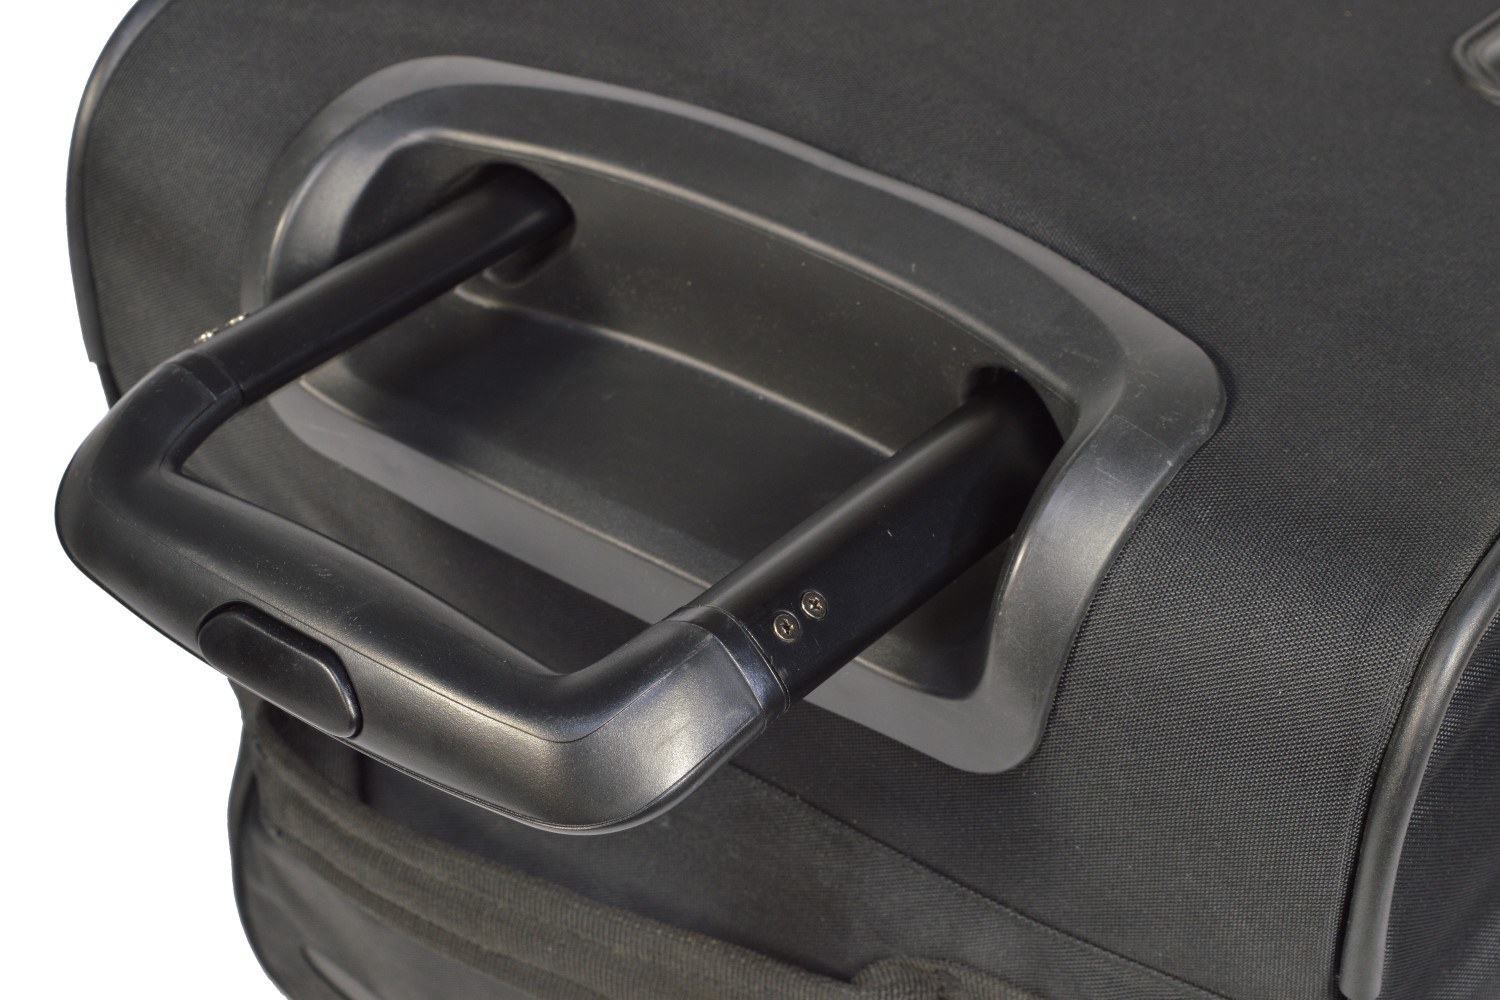 Travel bags fits Kia Sorento (MQ4) Plug-in Hybrid tailor made (6